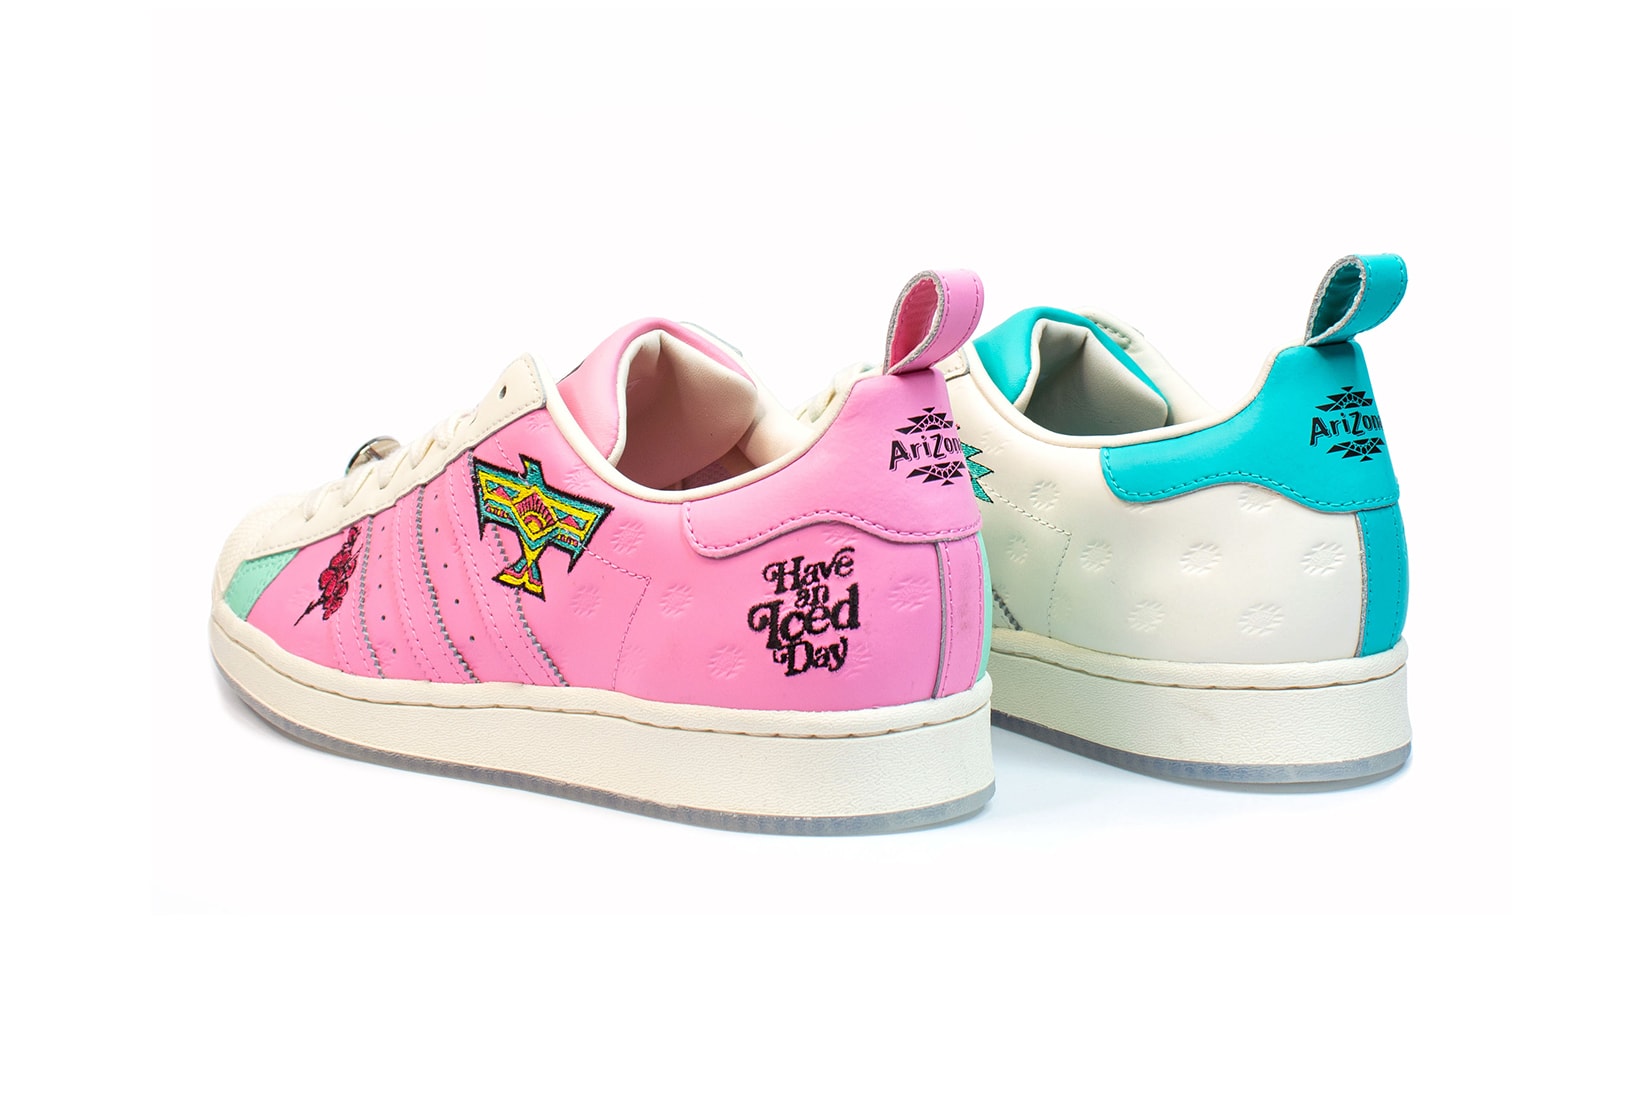 adidas originals arizona iced tea superstar collaboration sneakers big cans pink white blue heel